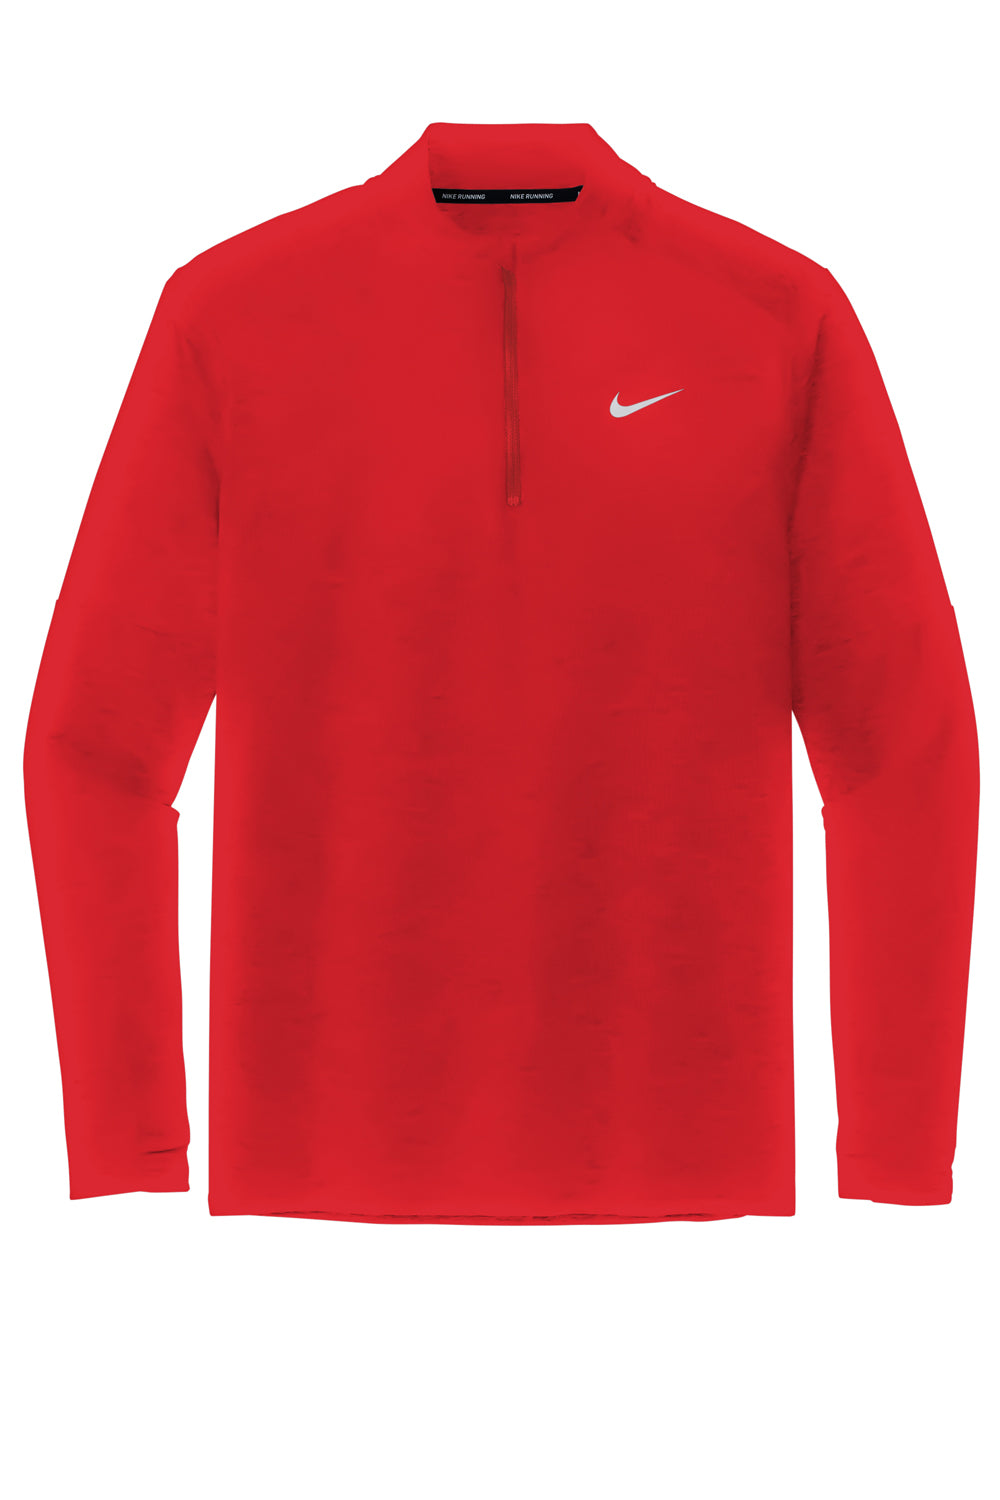 Nike NKDH4949 Mens Element Dri-Fit Moisture Wicking 1/4 Zip Sweatshirt Scarlet Red Flat Front